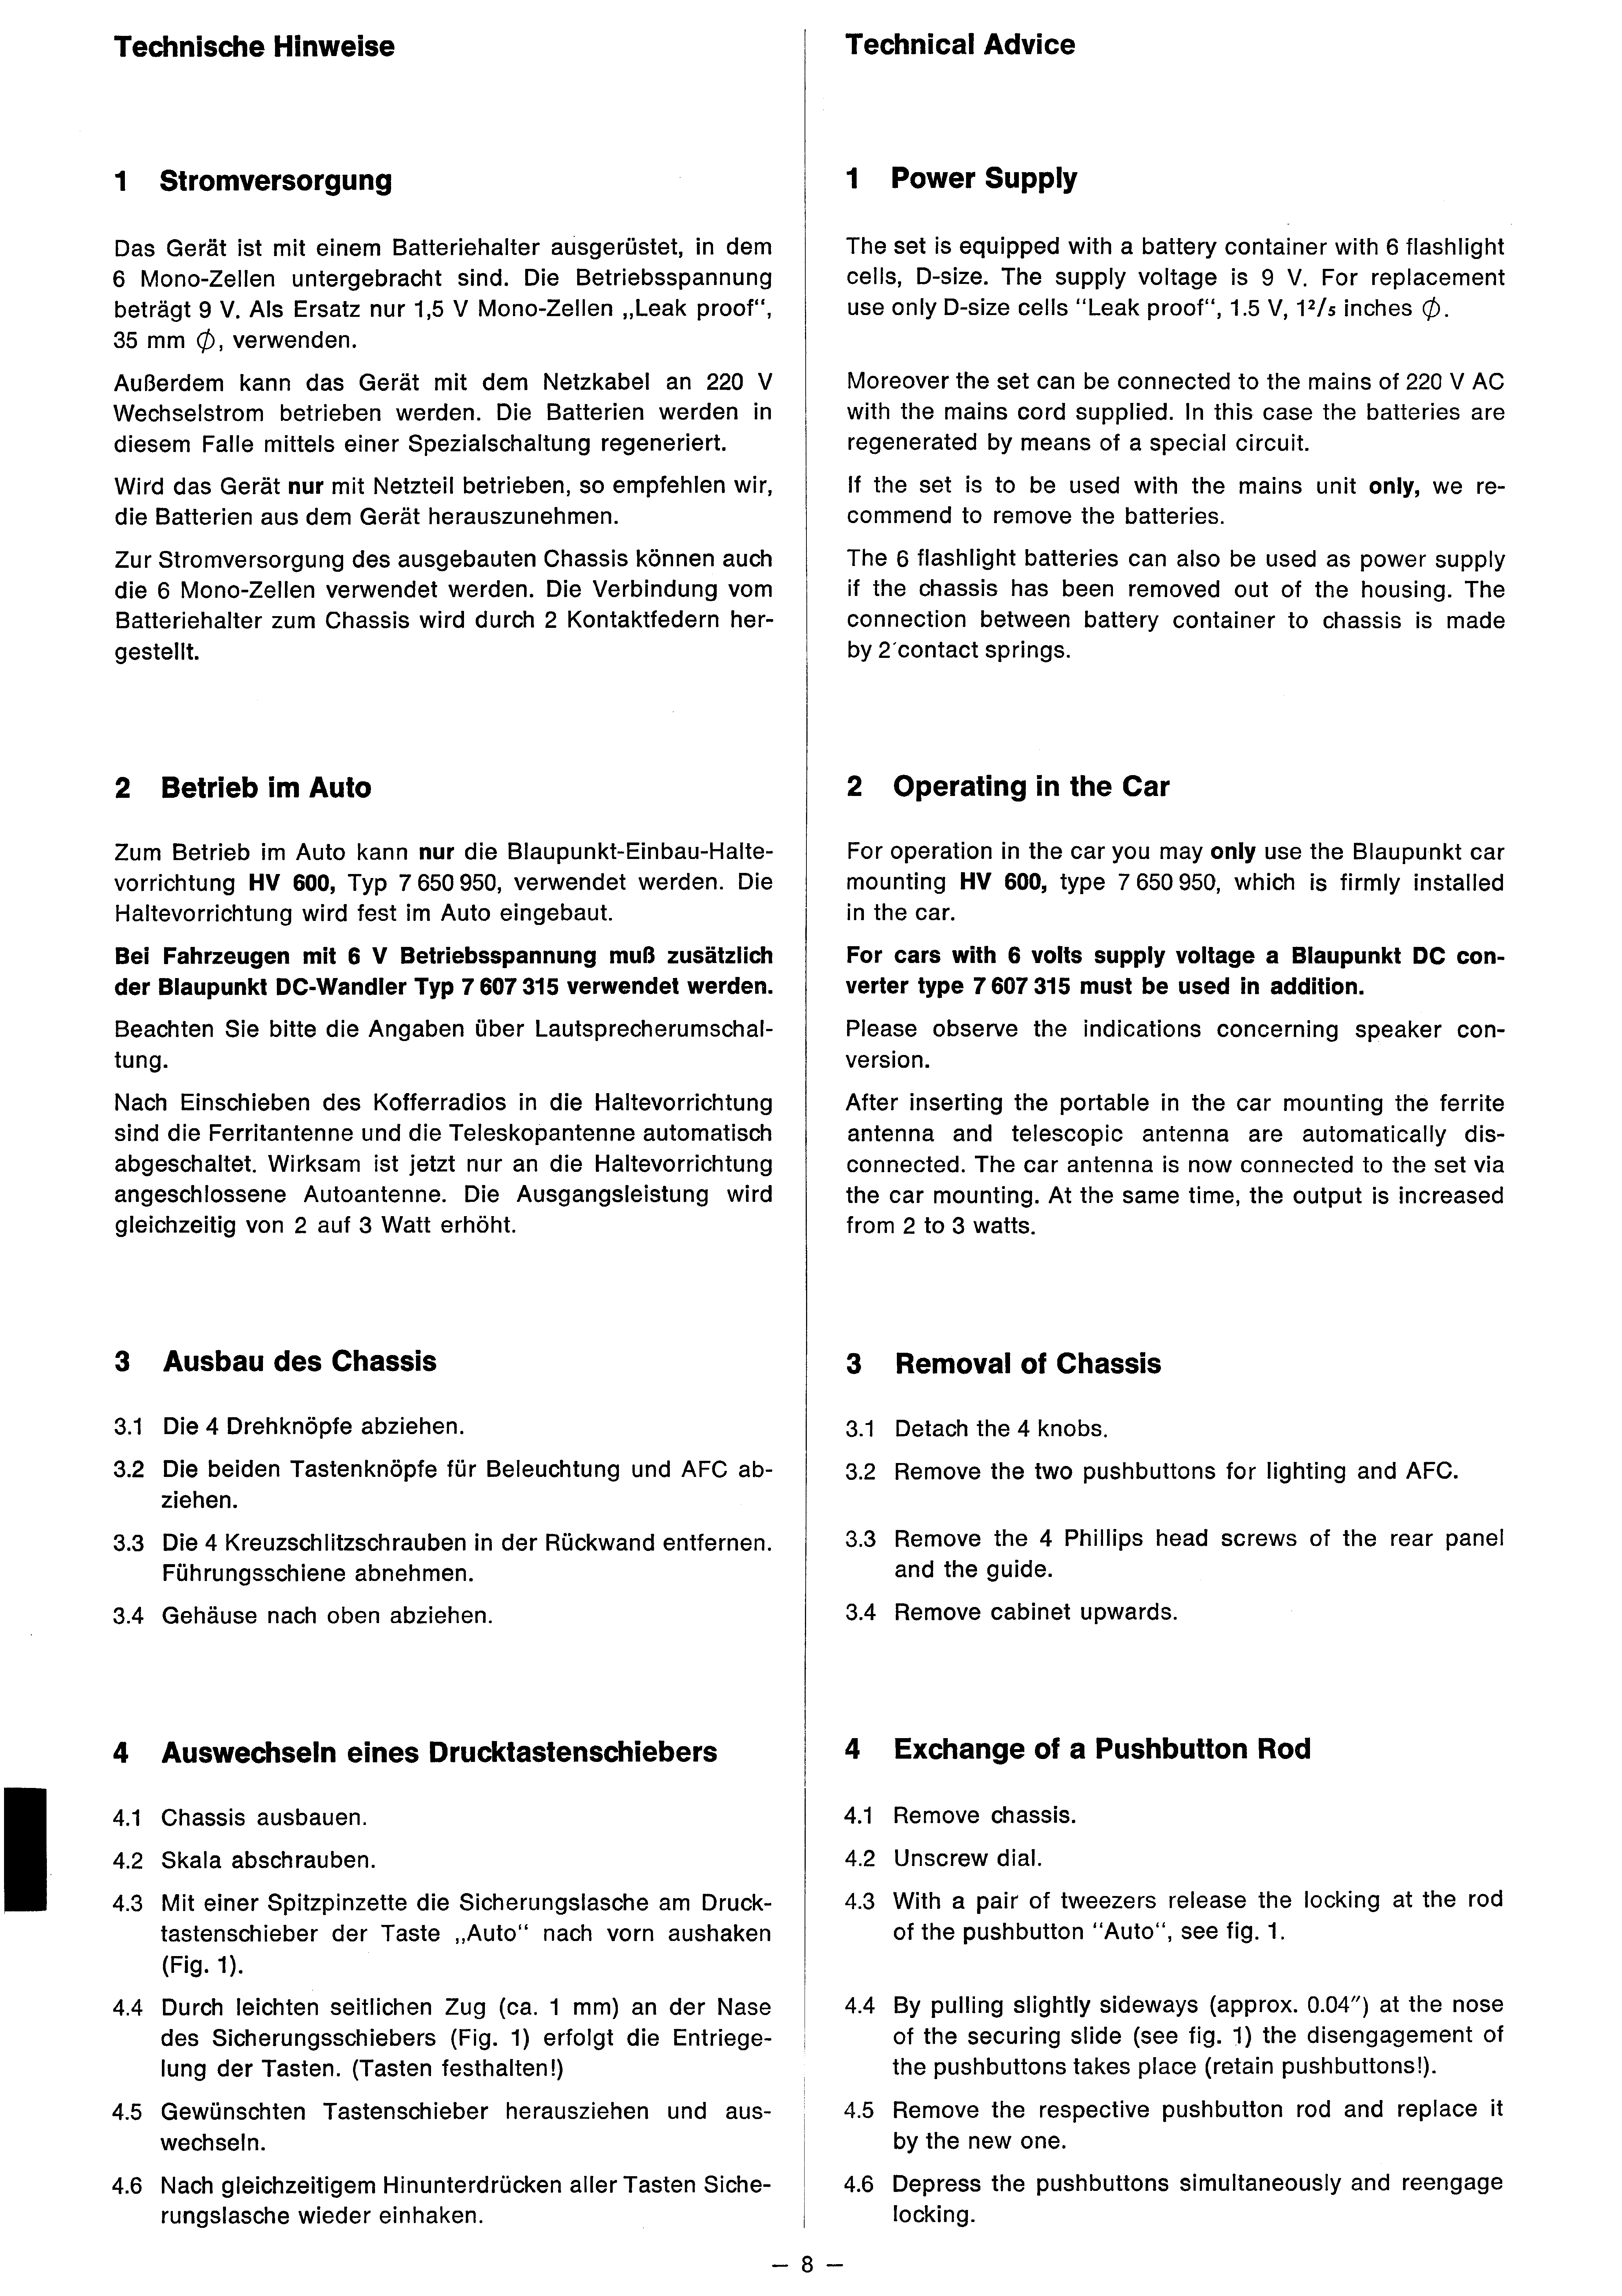 BLAUPUNKT DERBY COMMANDER 7651 560 561 SM service manual (2nd page)